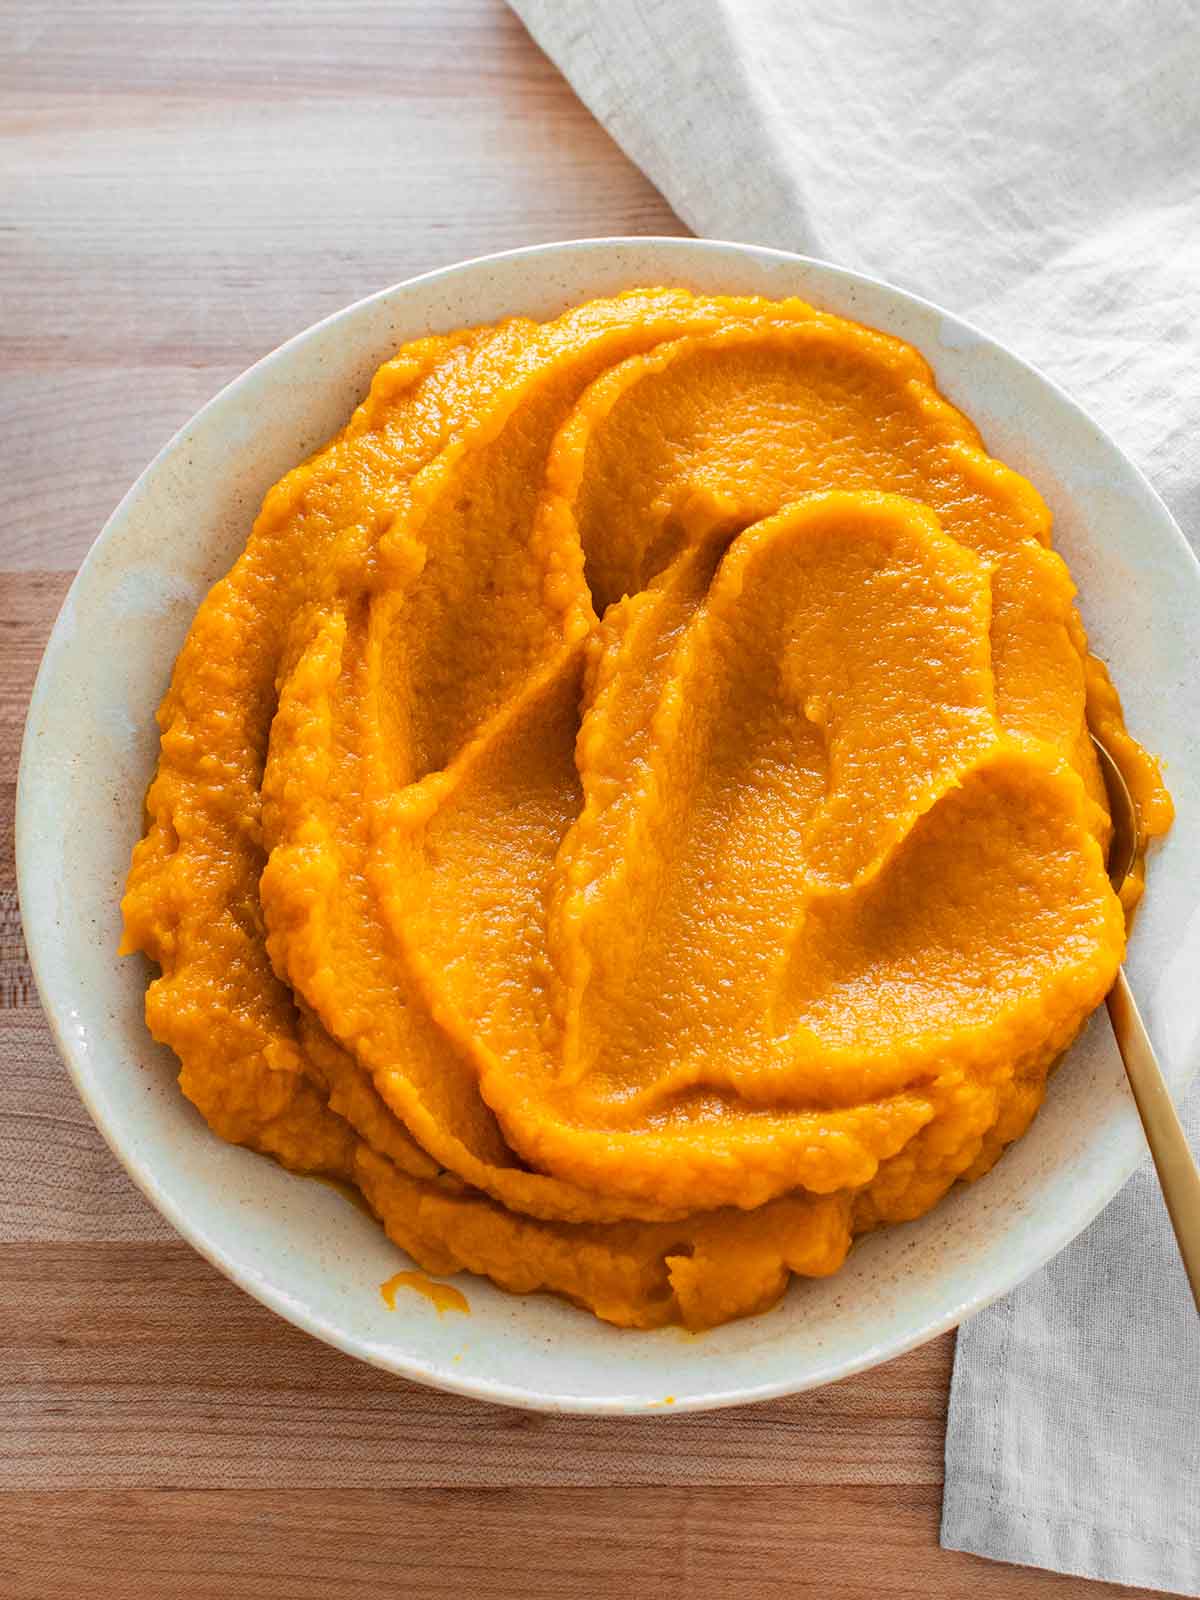 Homemade Pumpkin Puree Recipe